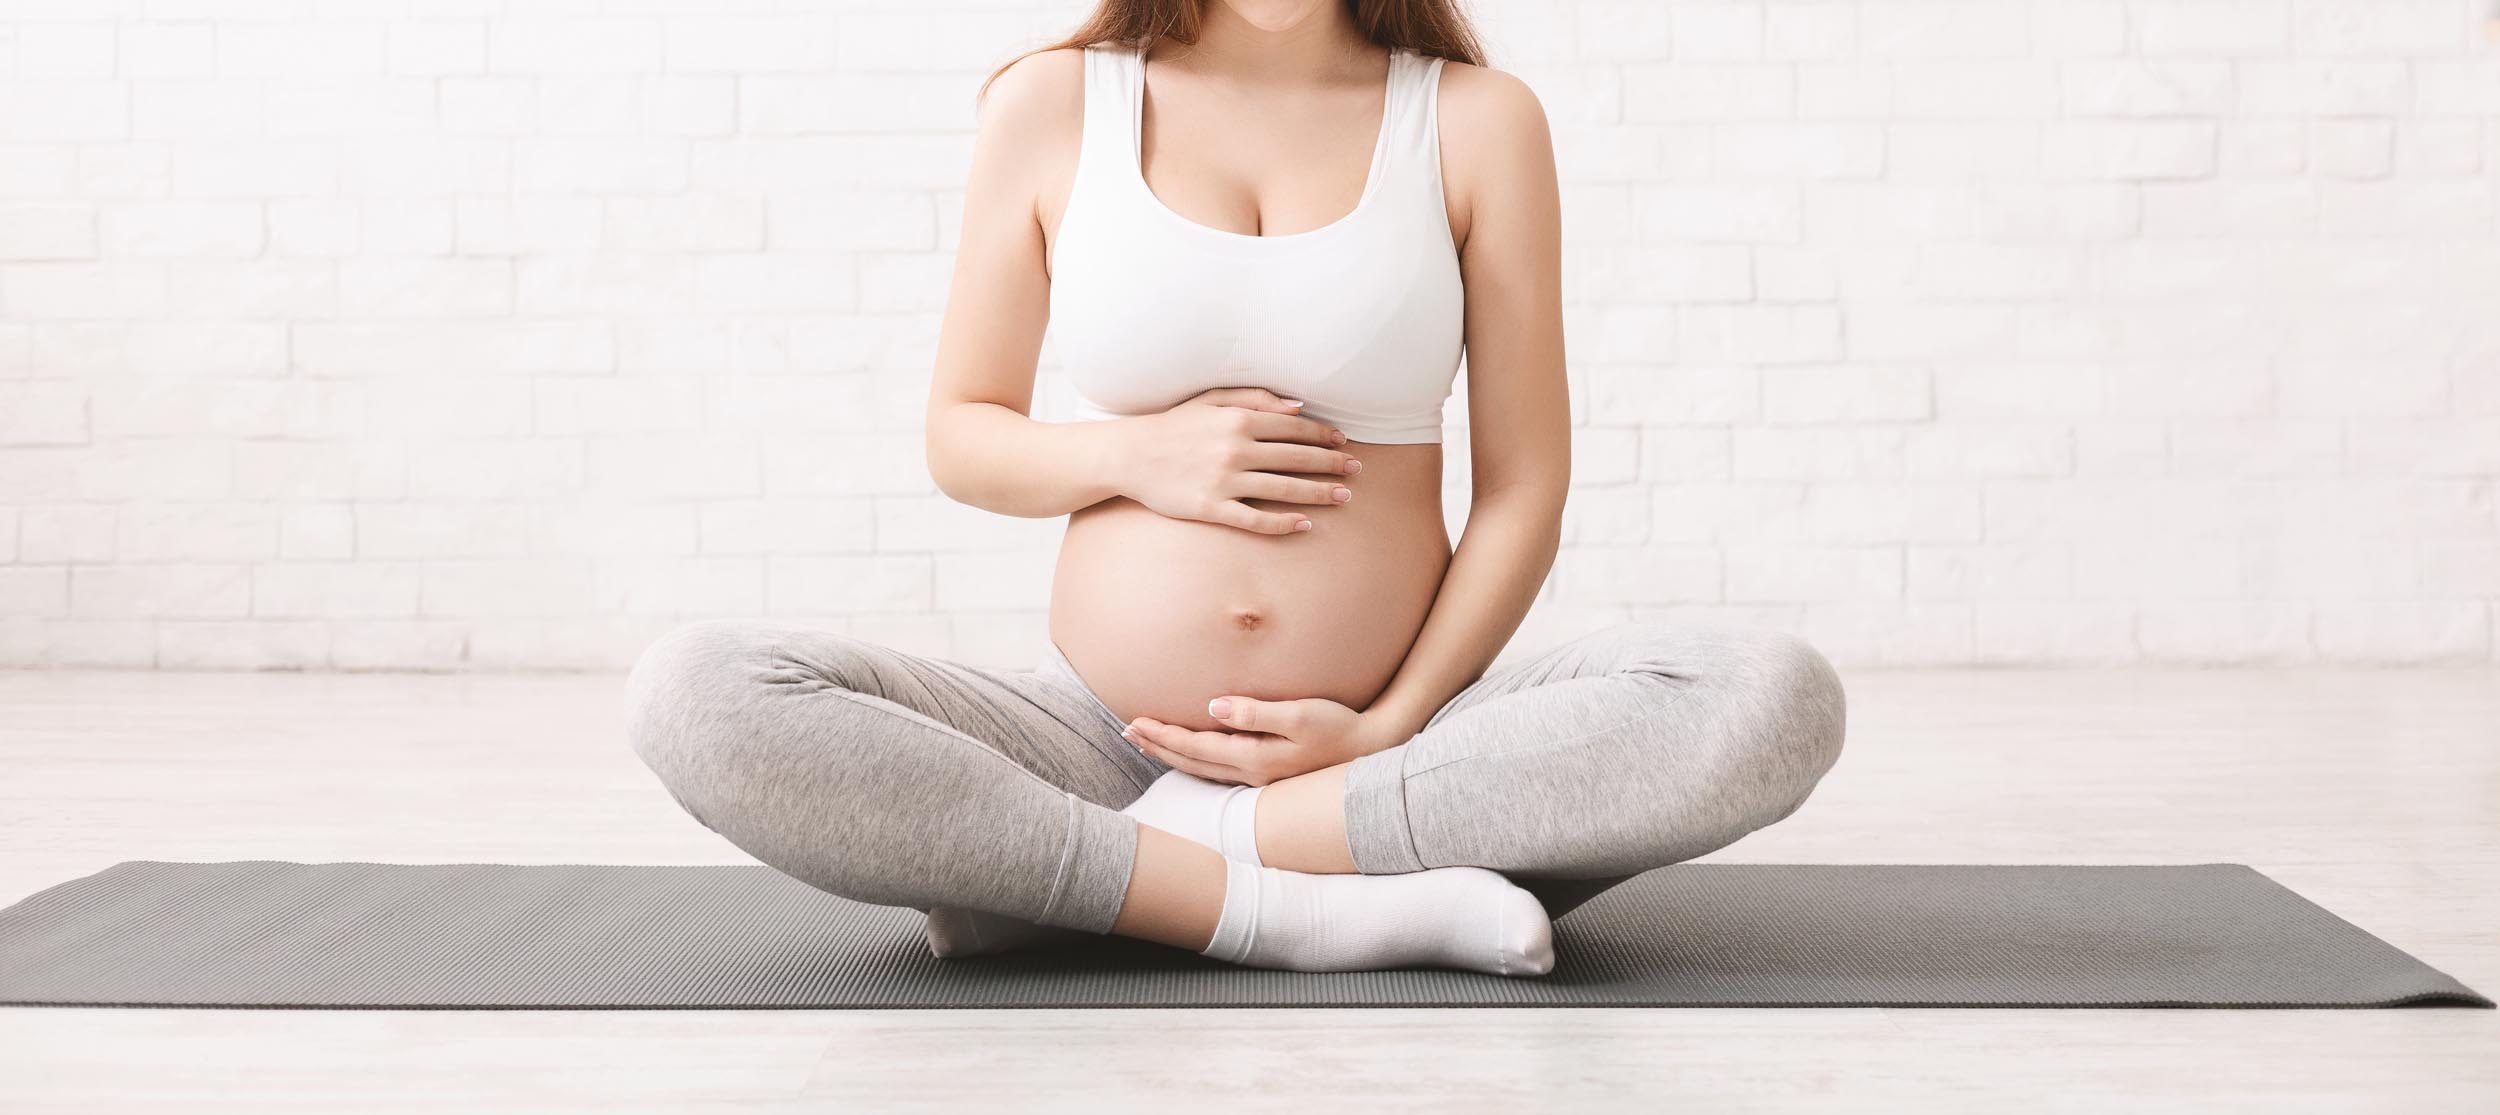 Leaking Urine During Pregnancy